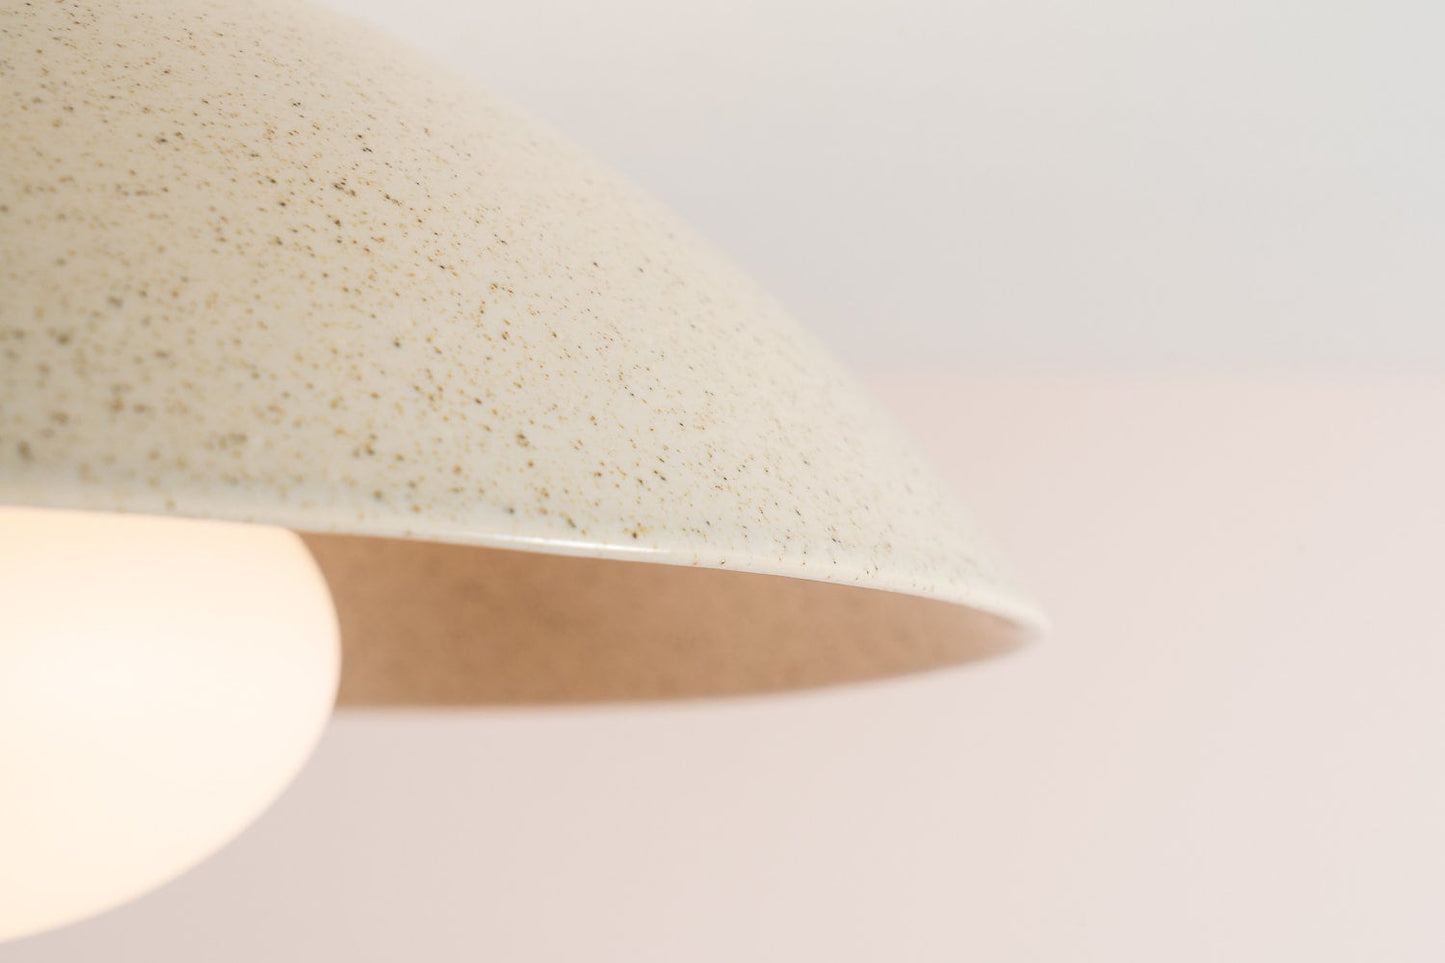 Speckled Cream Gloss Dawn Flush Mount Ceiling Light in Ceramic and Oak by StudioHaran